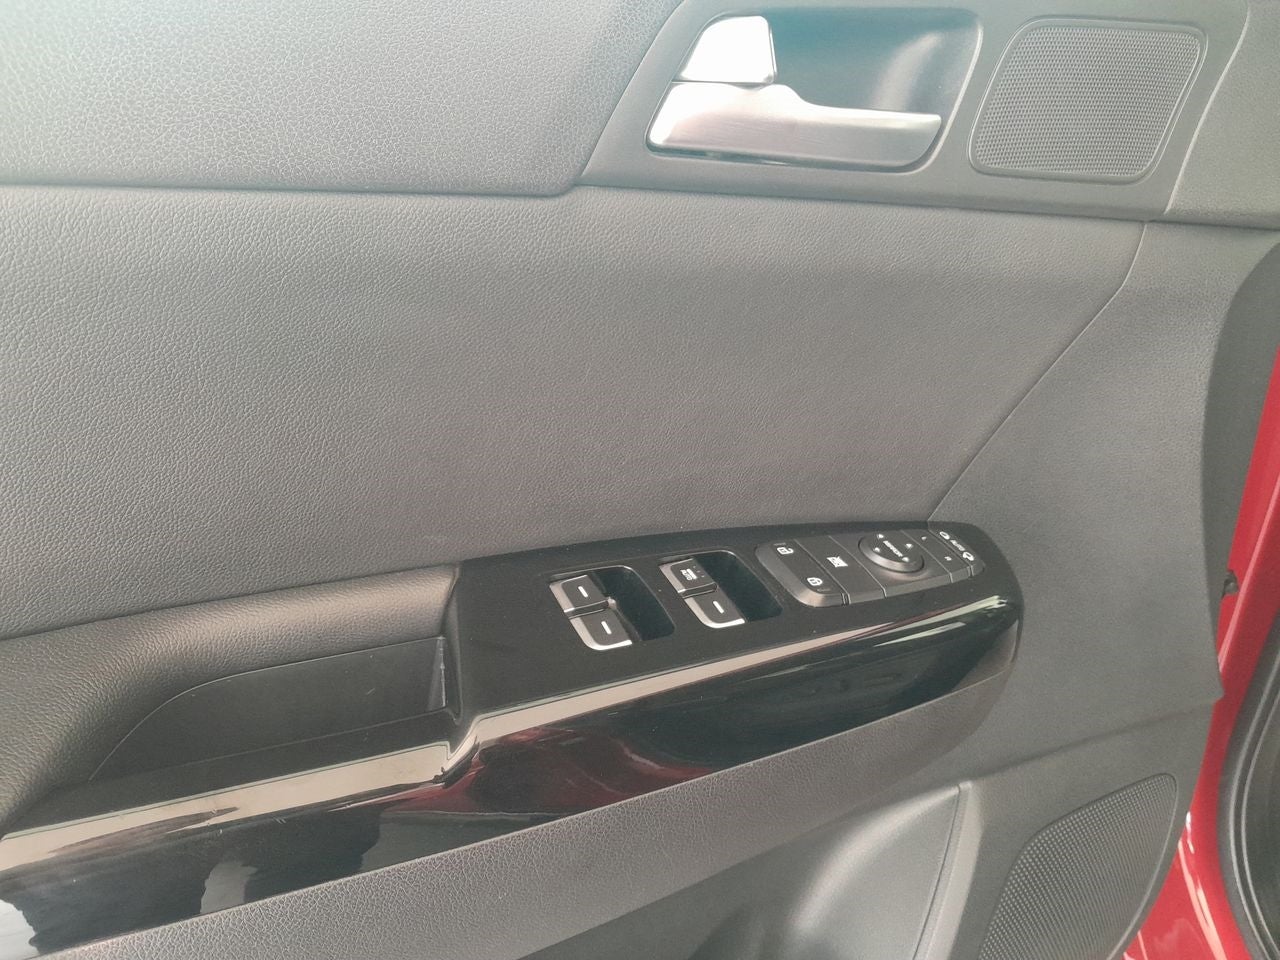 2019 Kia Sportage 5p SXL L4/2.4 Aut